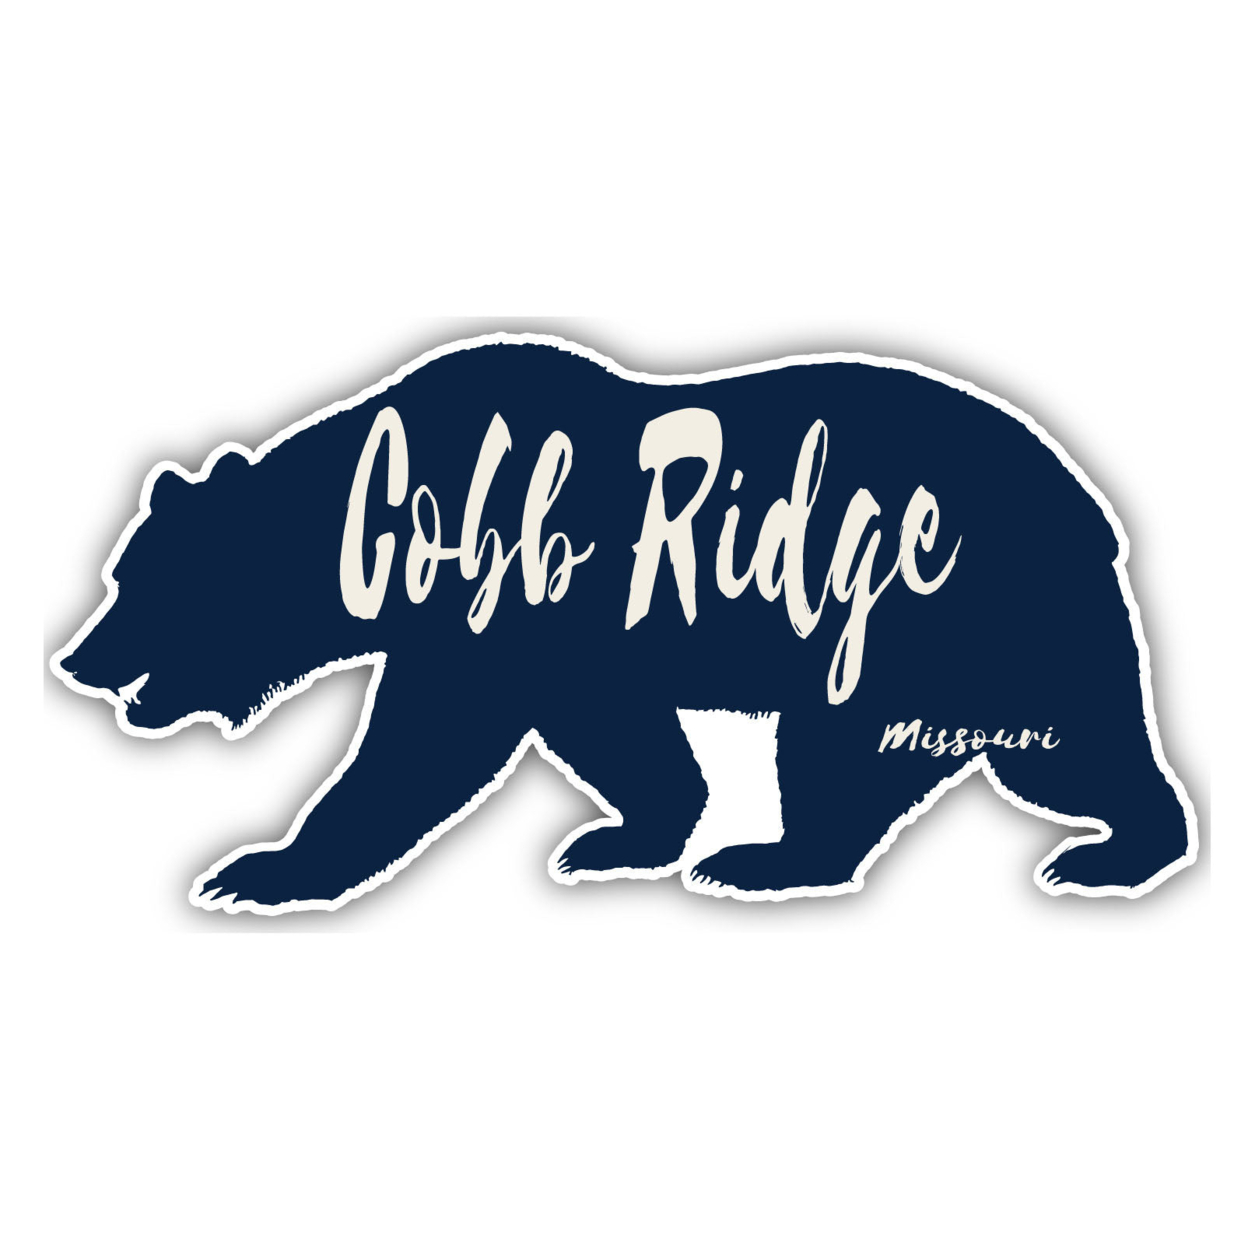 Cobb Ridge Missouri Souvenir Decorative Stickers (Choose Theme And Size) - 4-Pack, 4-Inch, Bear